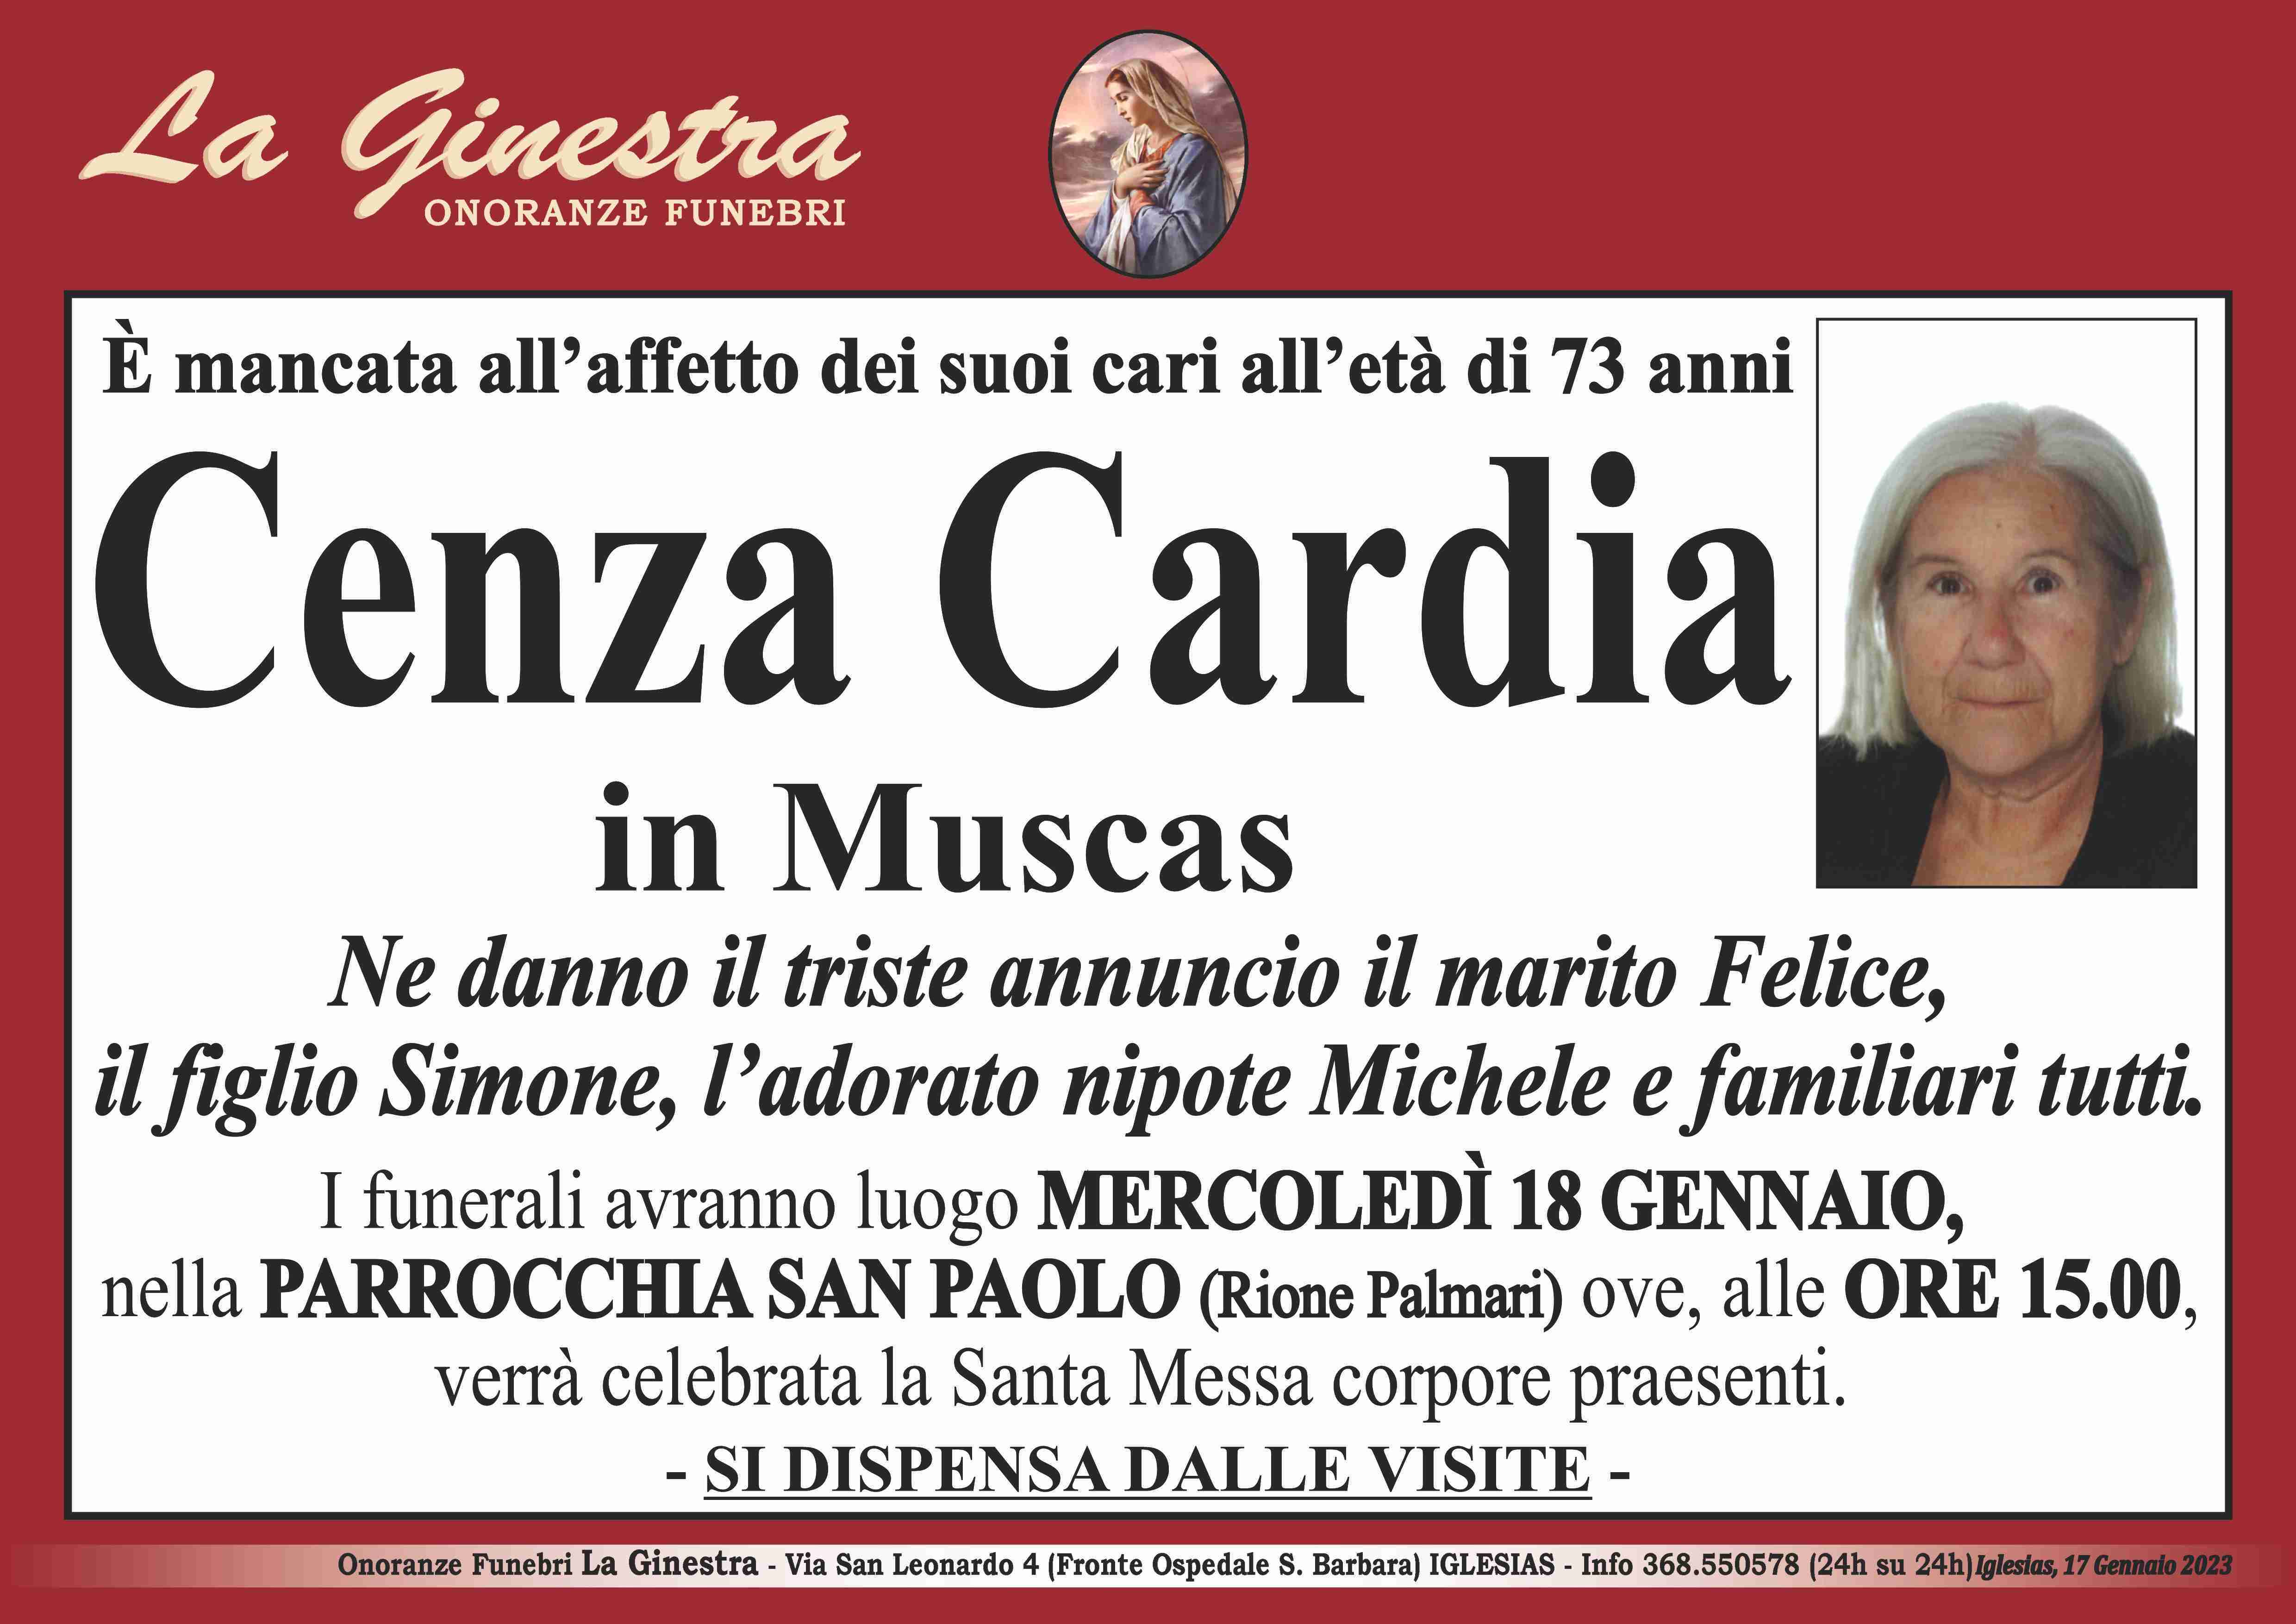 Vincenza Cardia